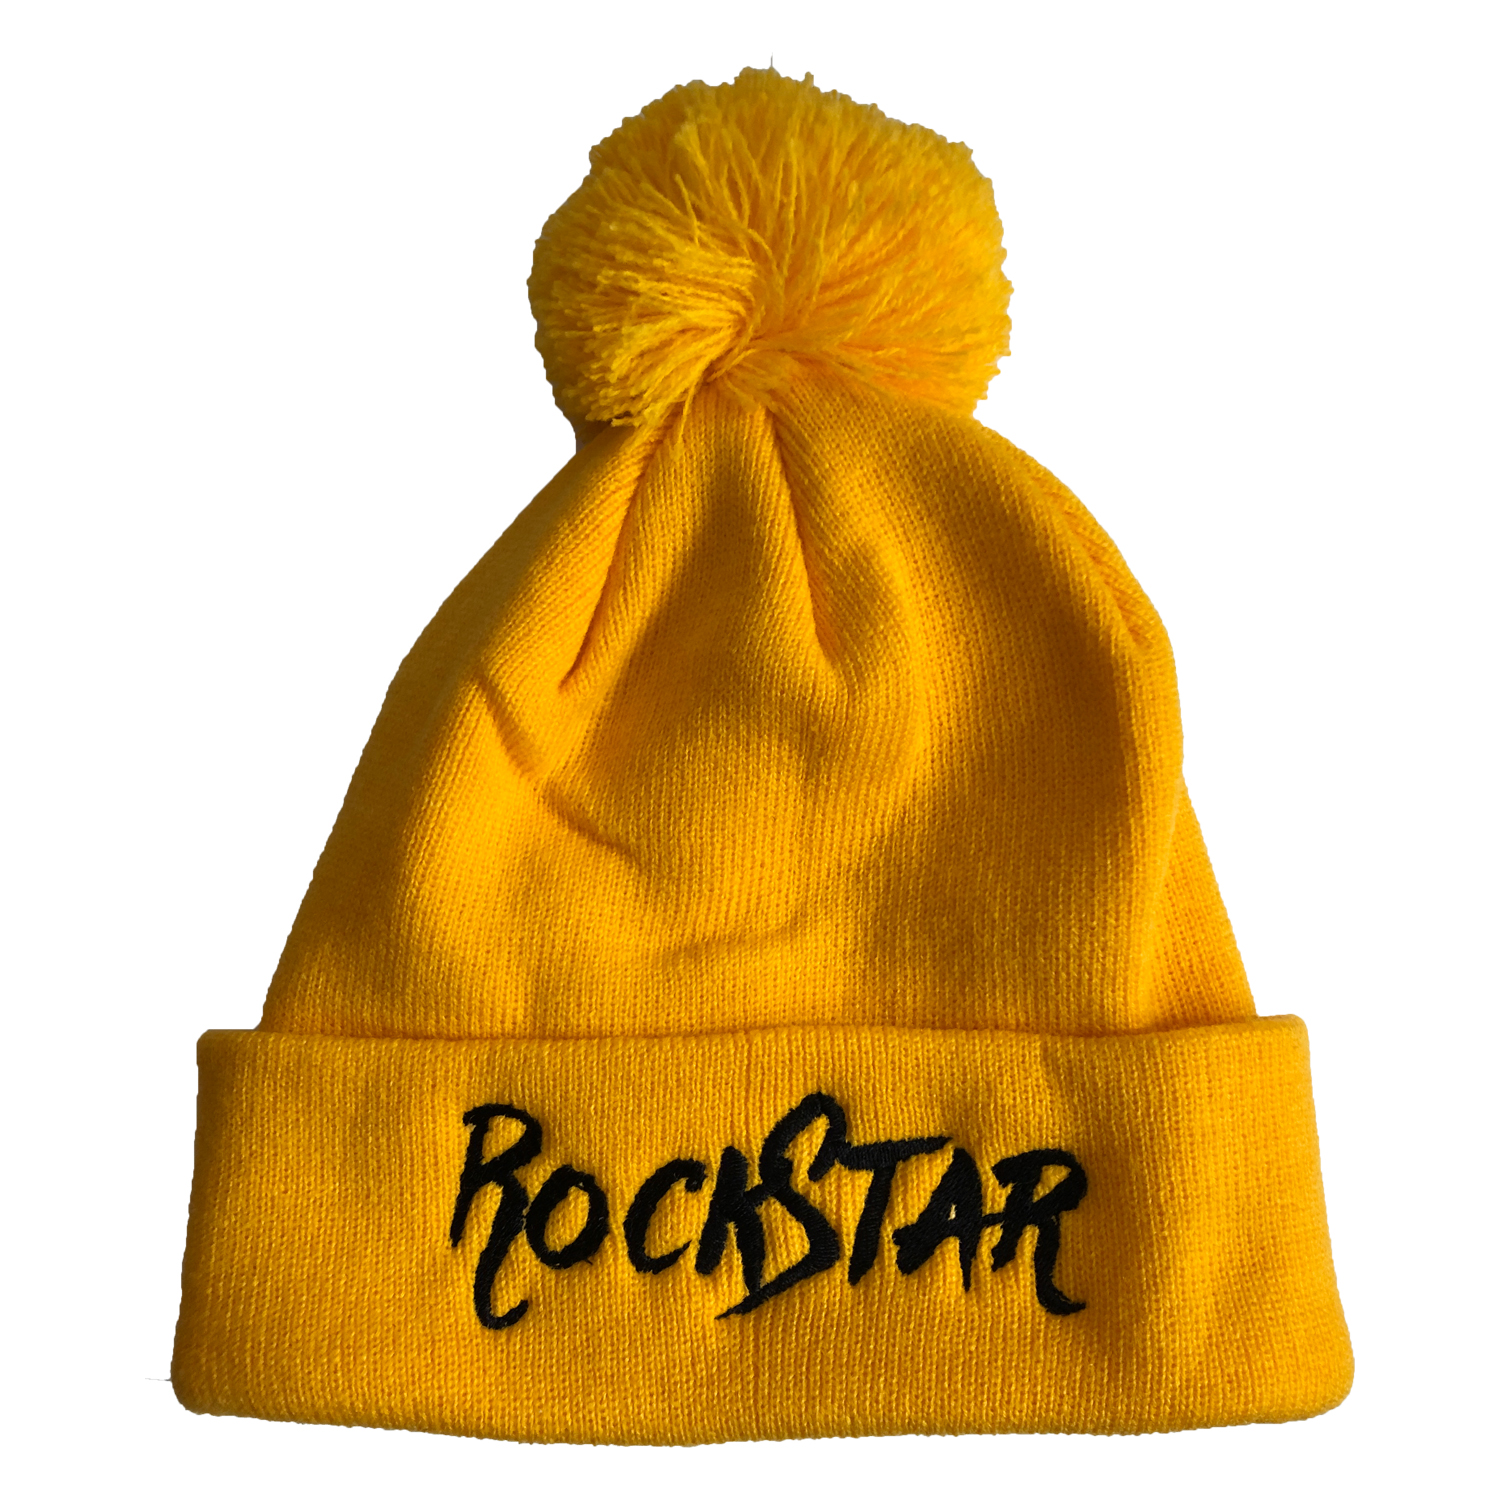 Beau Tyler - RockStar winter knit hat gold front - maybe temp